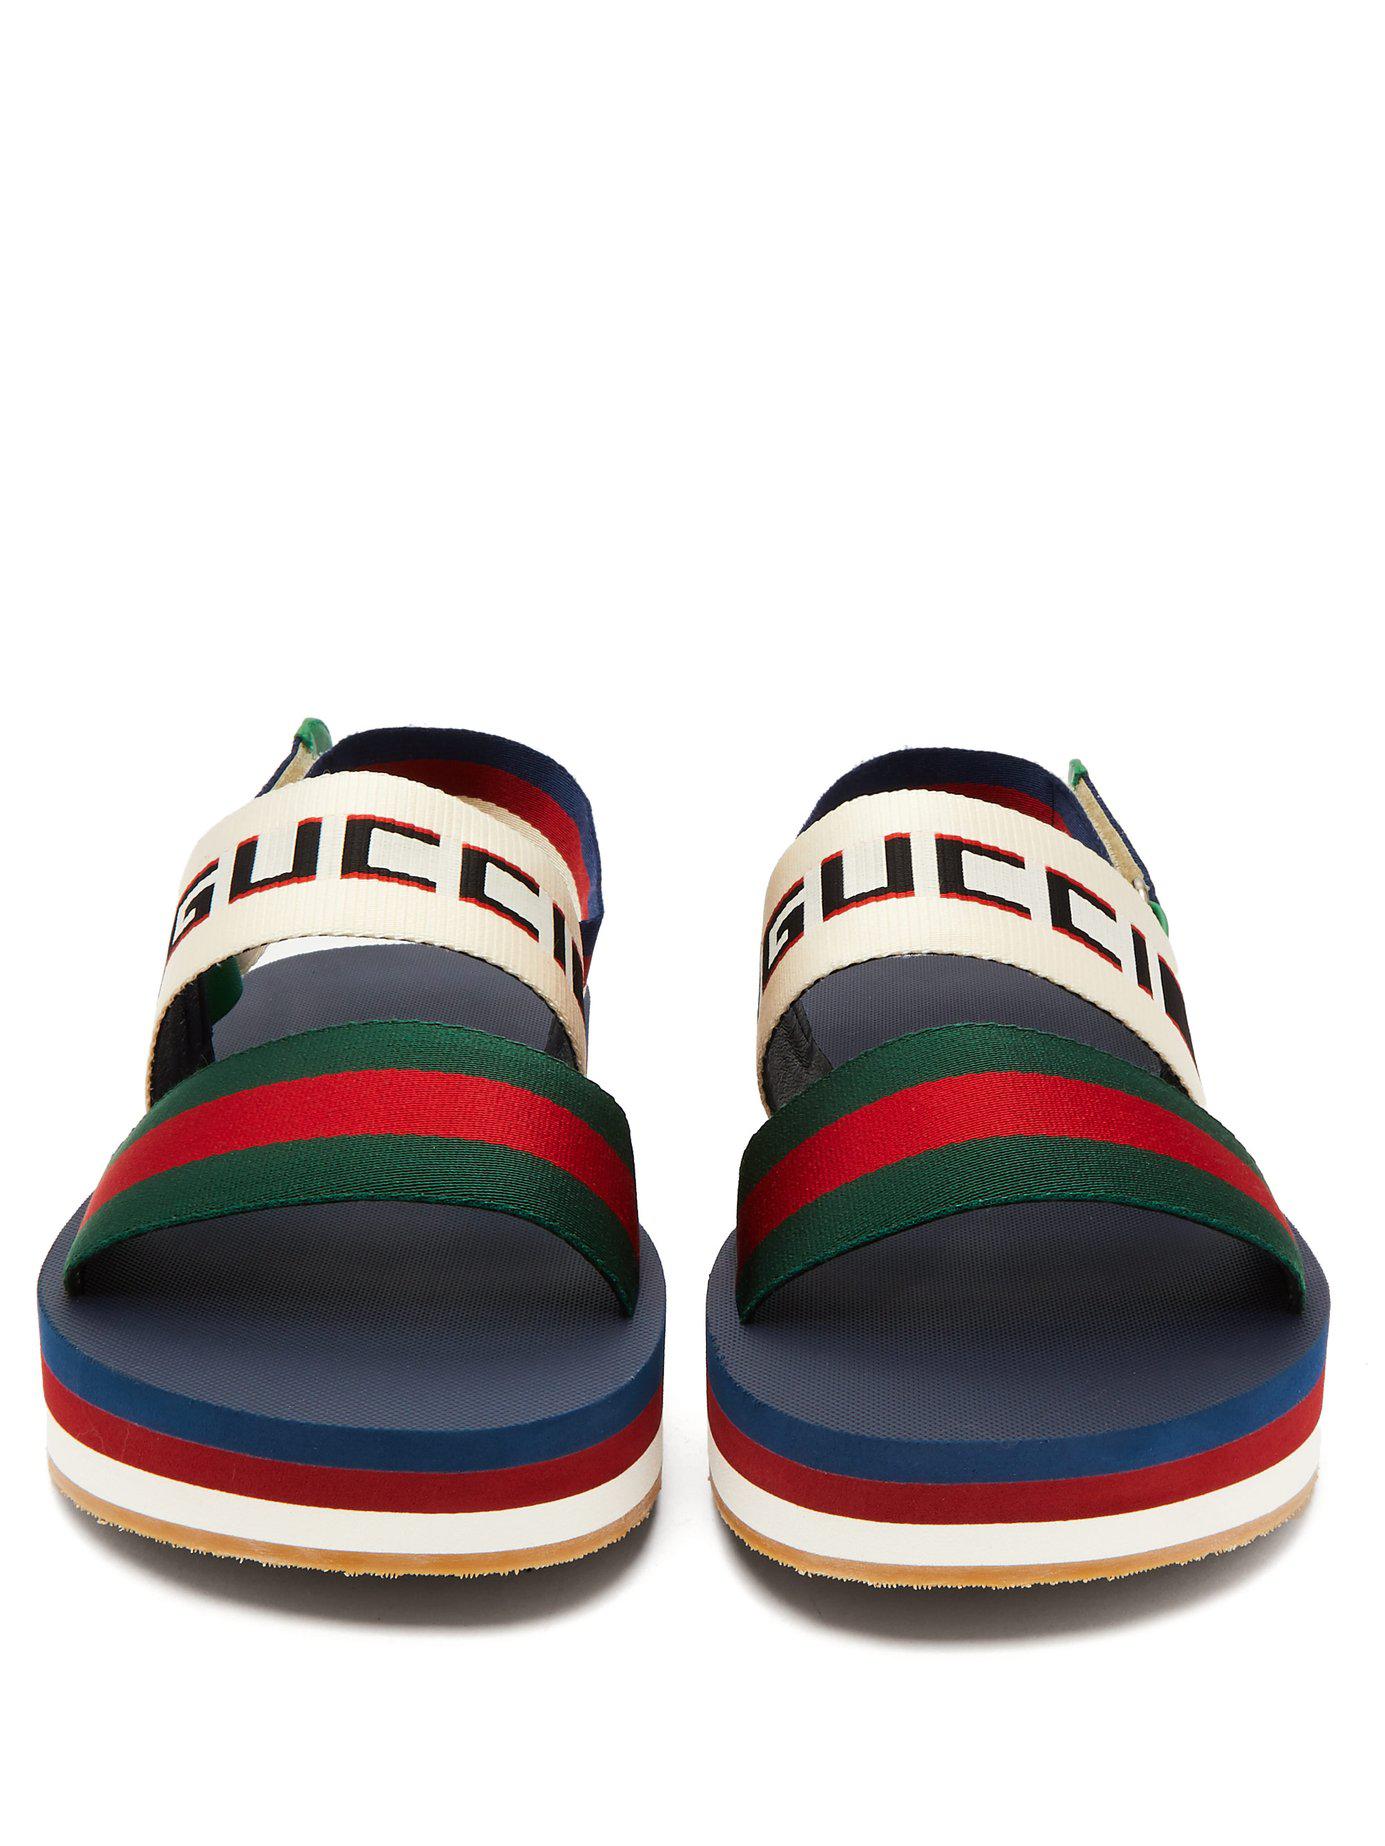 Gucci Bedlam Logo Strap Sandals for Men - Lyst